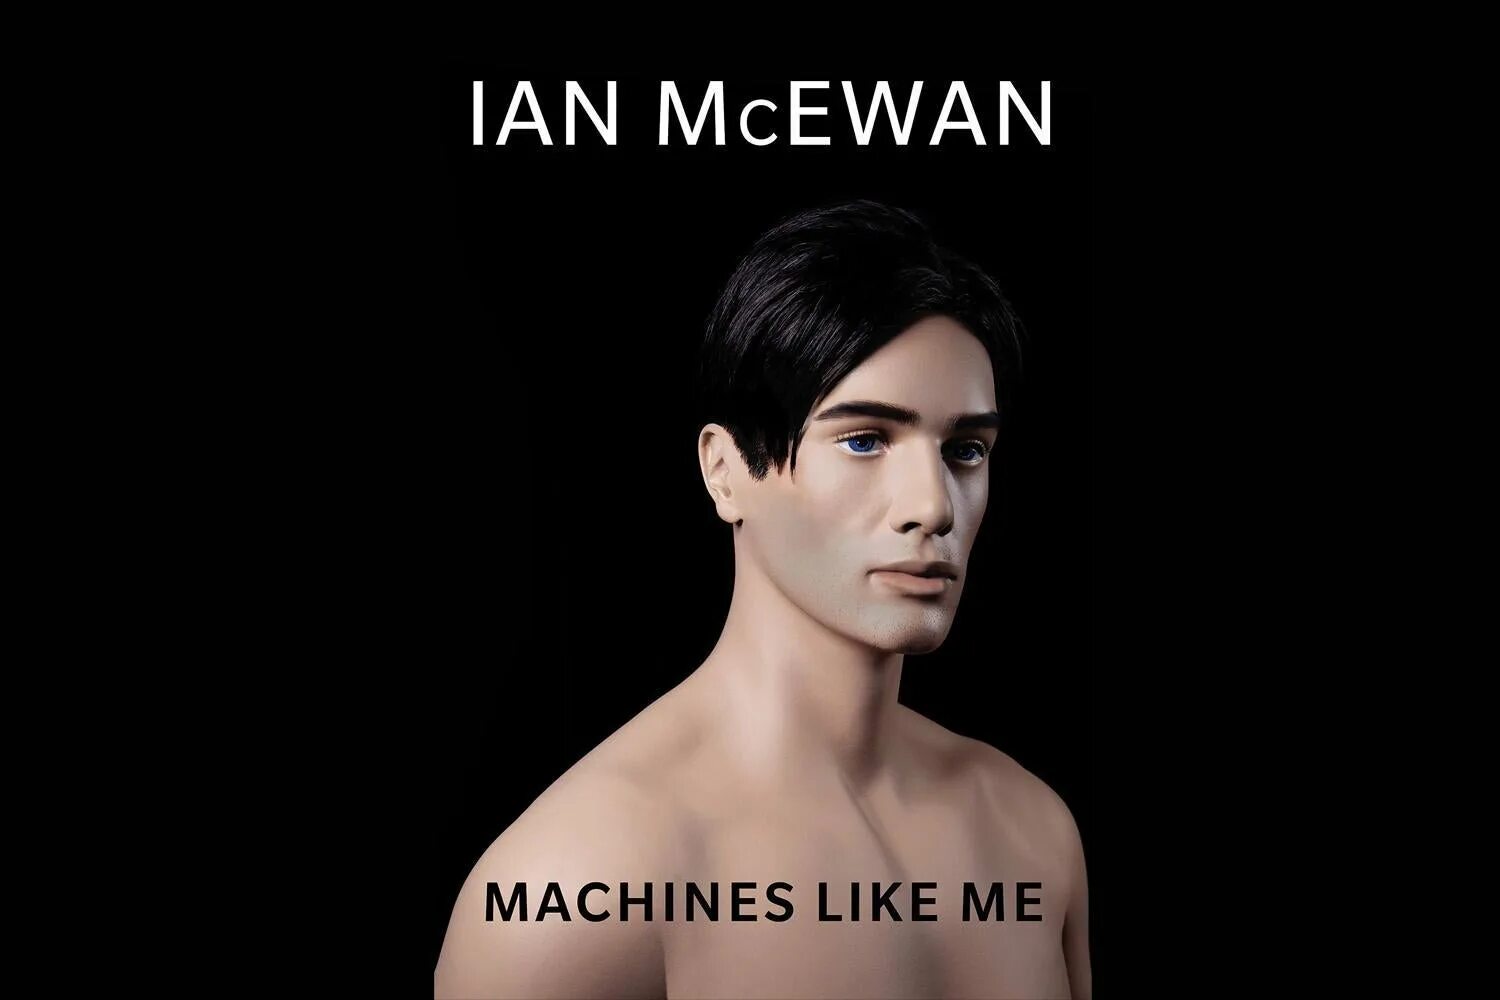 Man like me. Machines like me. Иэн Макьюэн "машины как я". Ian m. "MCEWAN enduring Love". MCEWAN I. "Machines like me".